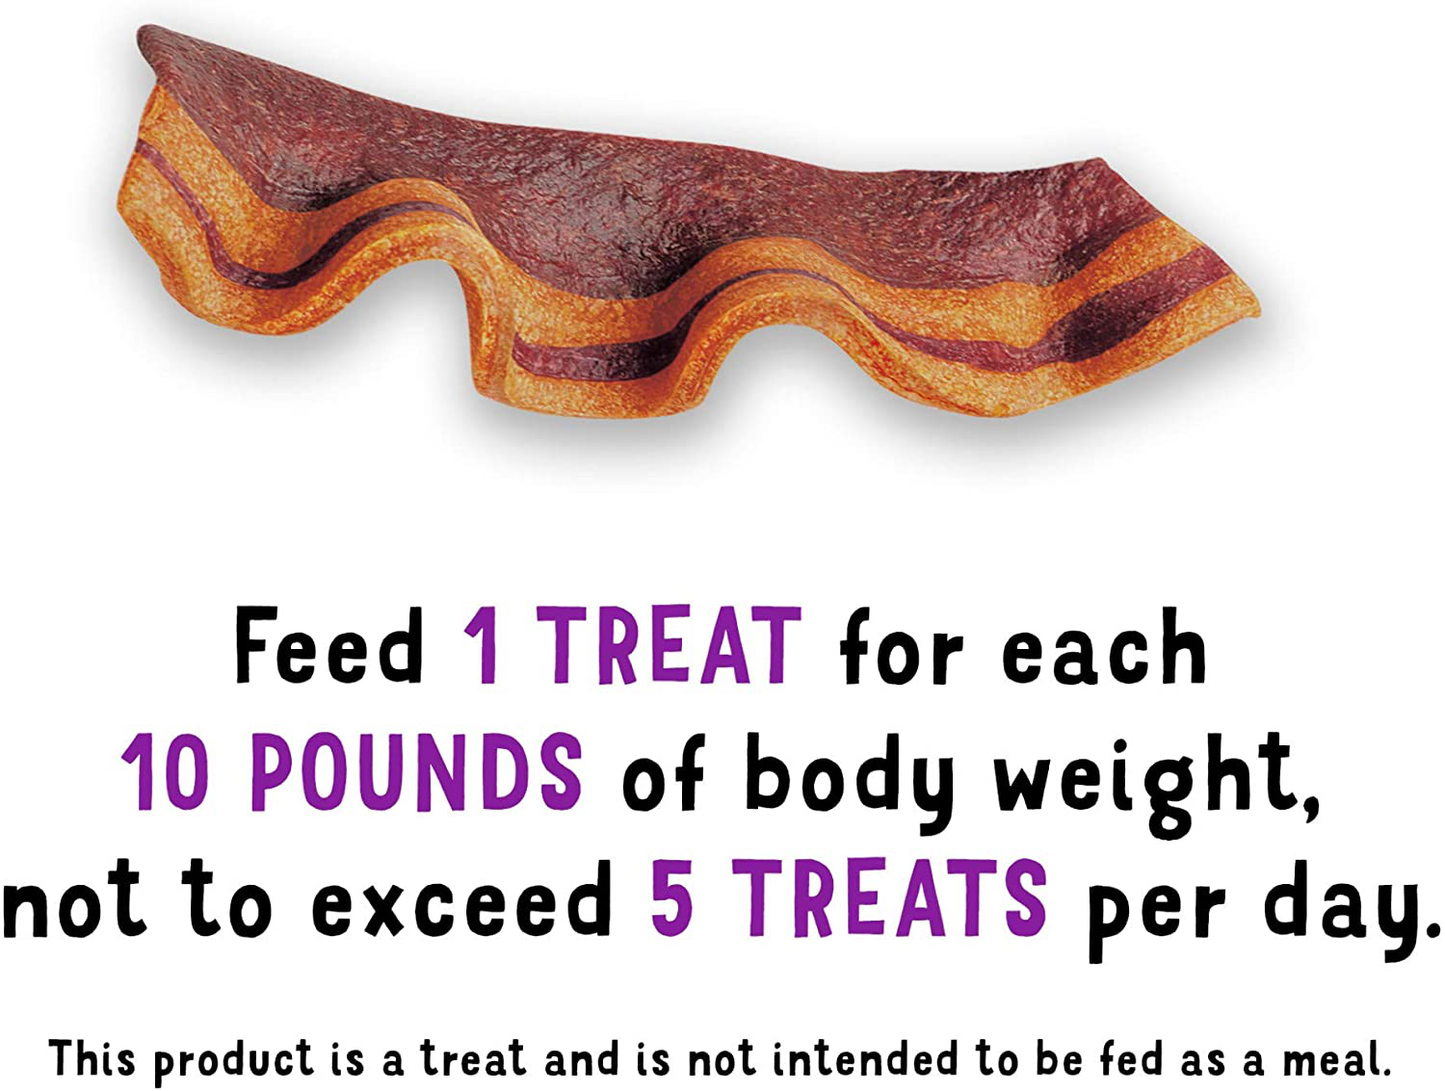 PURINA Beggin' Strips Bacon & Peanut Butter Dog Treats Made in USA Facilities Adult Dog Training Treats Animals & Pet Supplies > Pet Supplies > Dog Supplies > Dog Treats Purina Beggin'   